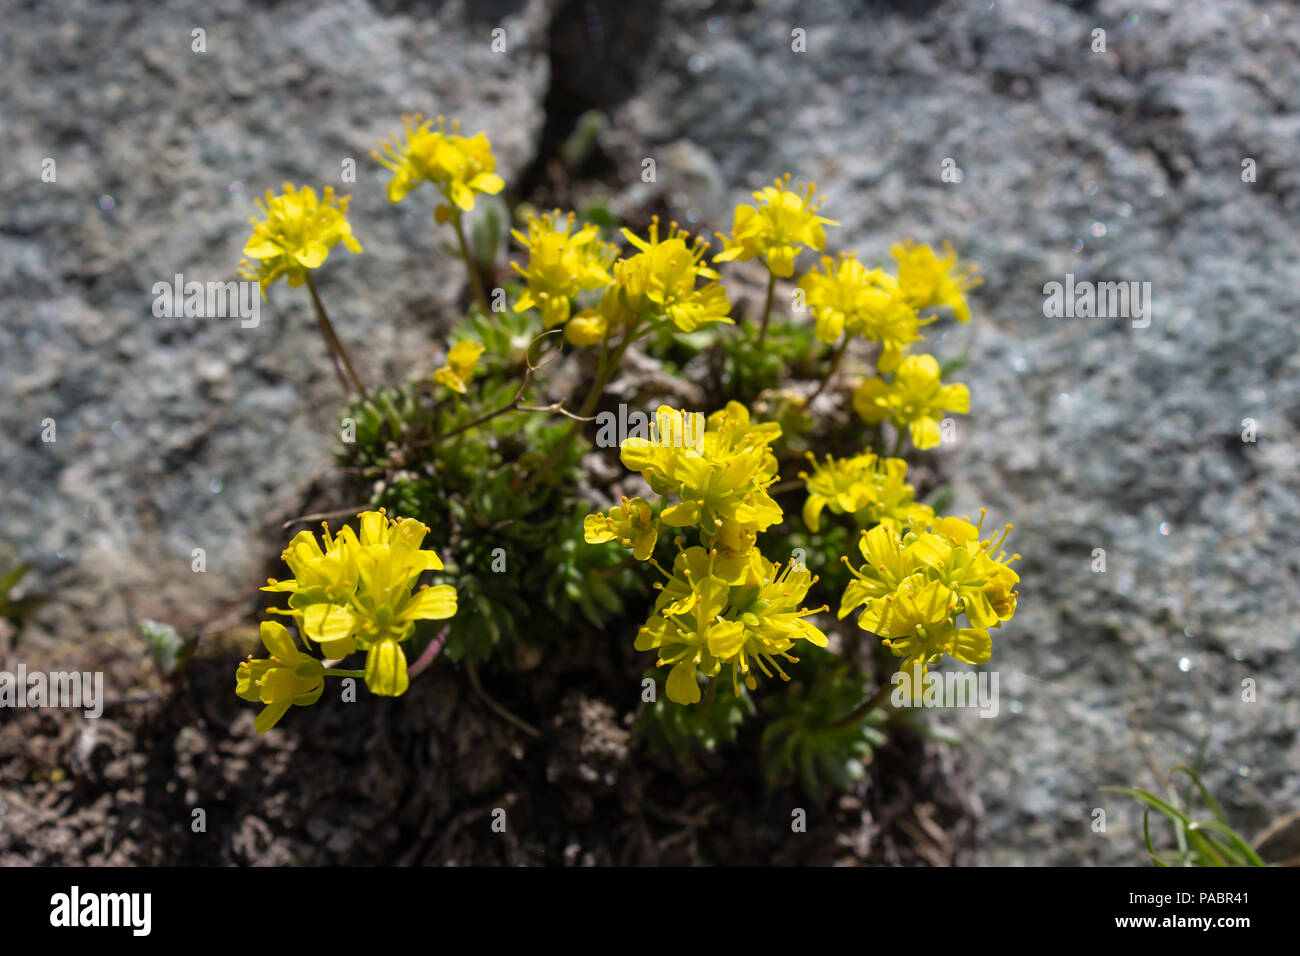 Alpine flower Draba Aizoides(yellow whitlow-grass ), Aosta valley, Italy. Photo taken at an altitude of 2900 meters. Stock Photo